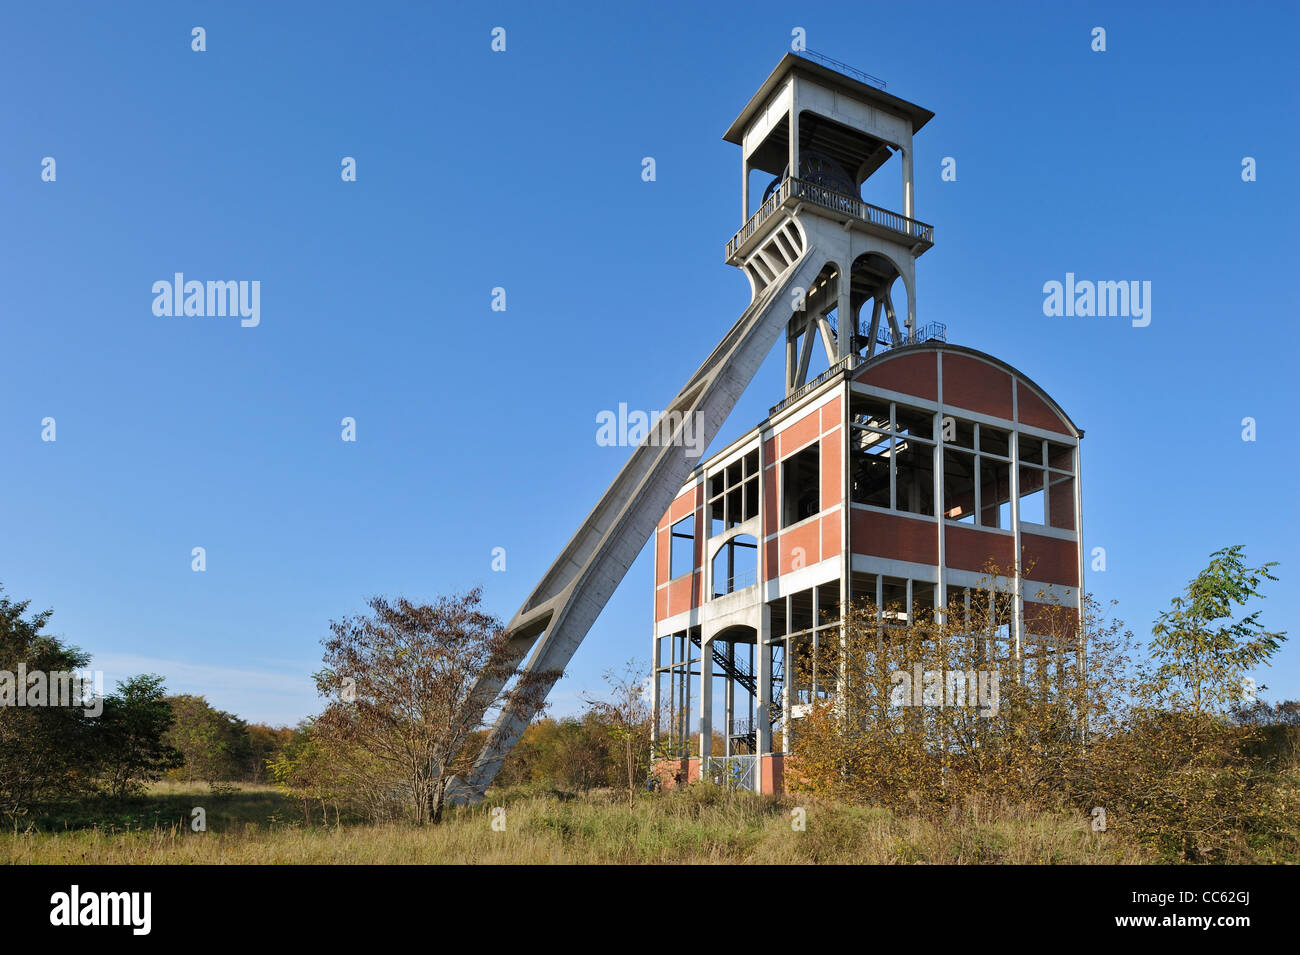 Restaurierte Fördergerüst / lift Turm der verlassenen Kohle mir / Zeche in Eisden, Limburg, Belgien Stockfoto